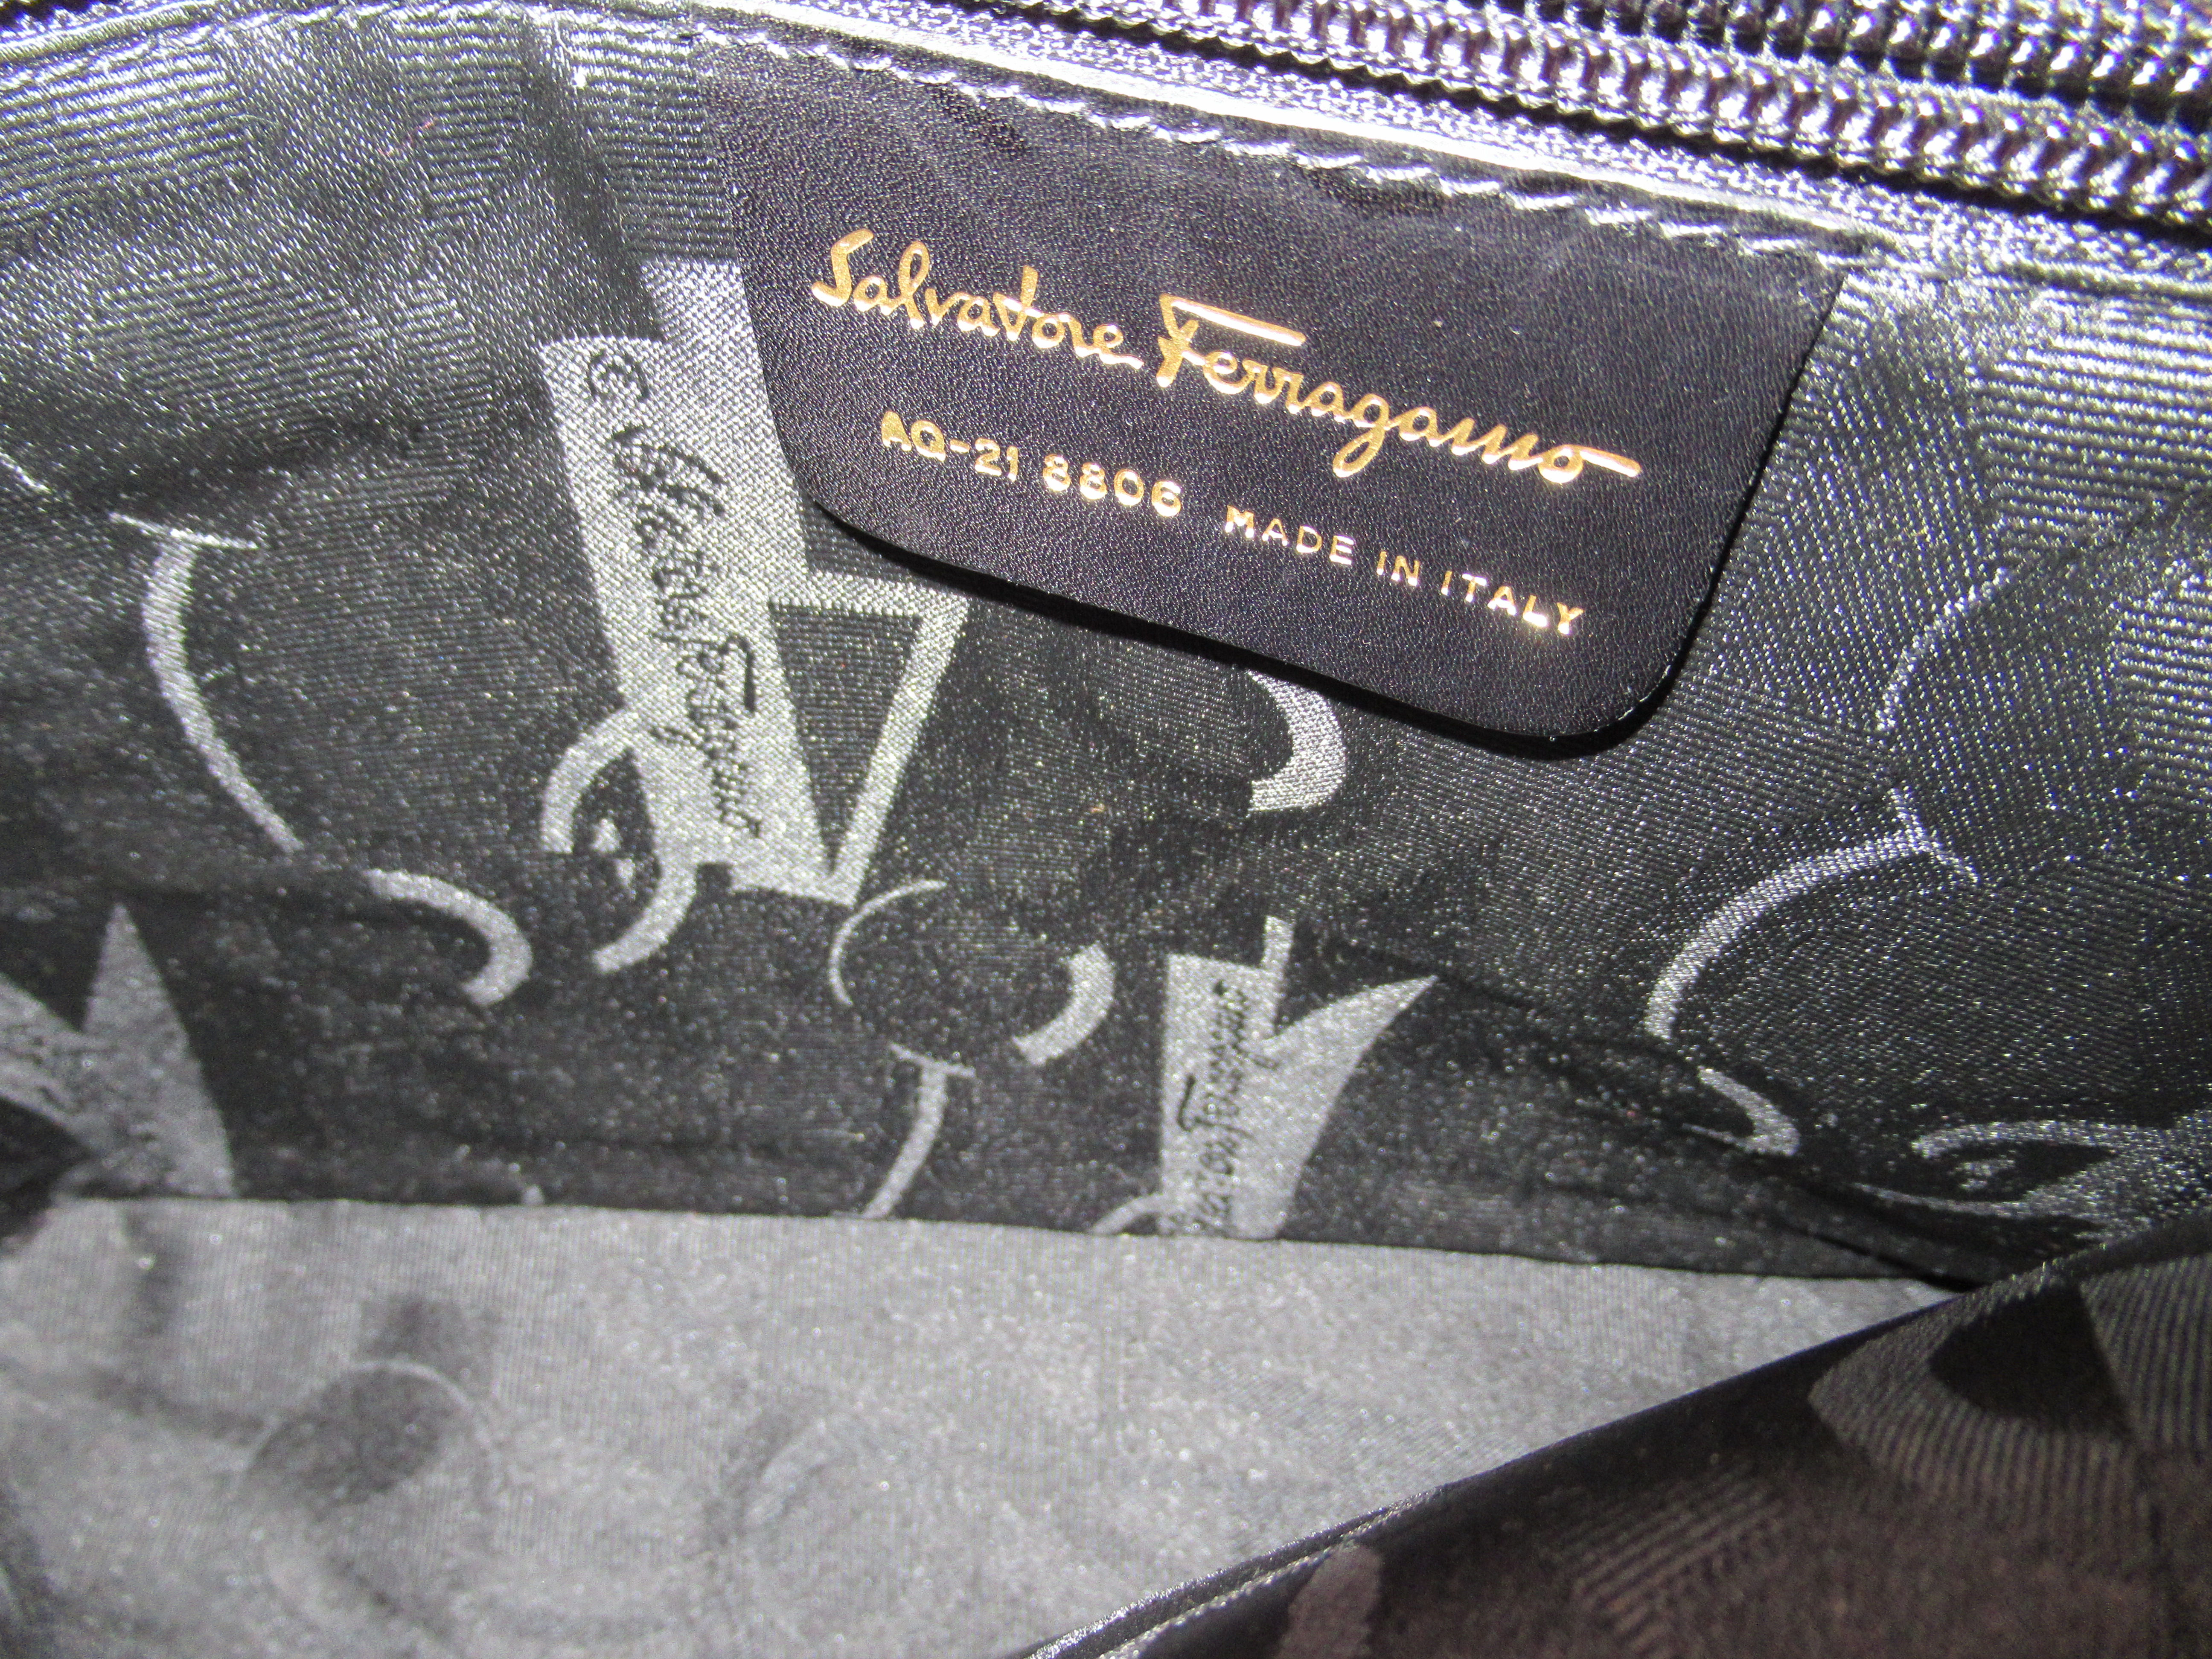 A Salvatore Ferragamo black leather tote bag OS6 - Image 3 of 3